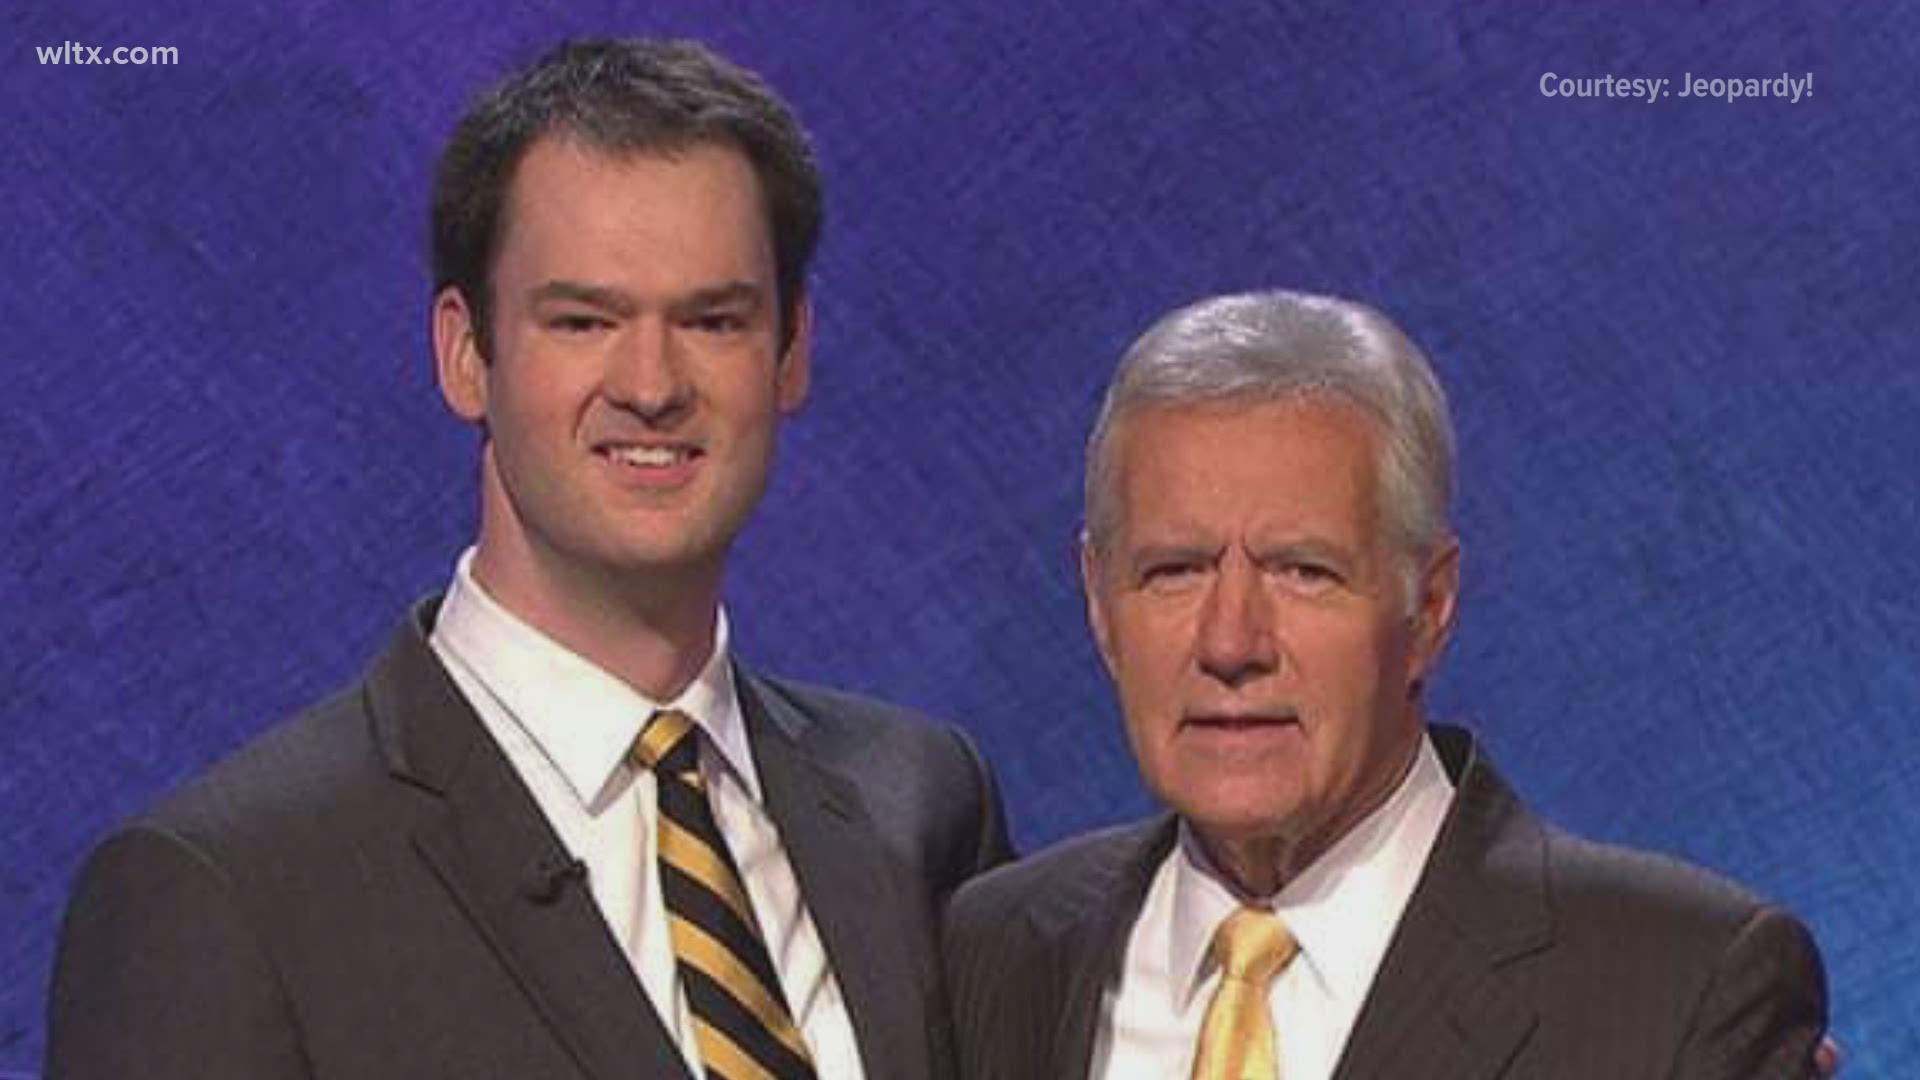 South Carolina native Ben Ingram reflects on his time with Jeopardy! host Alex Trebek.